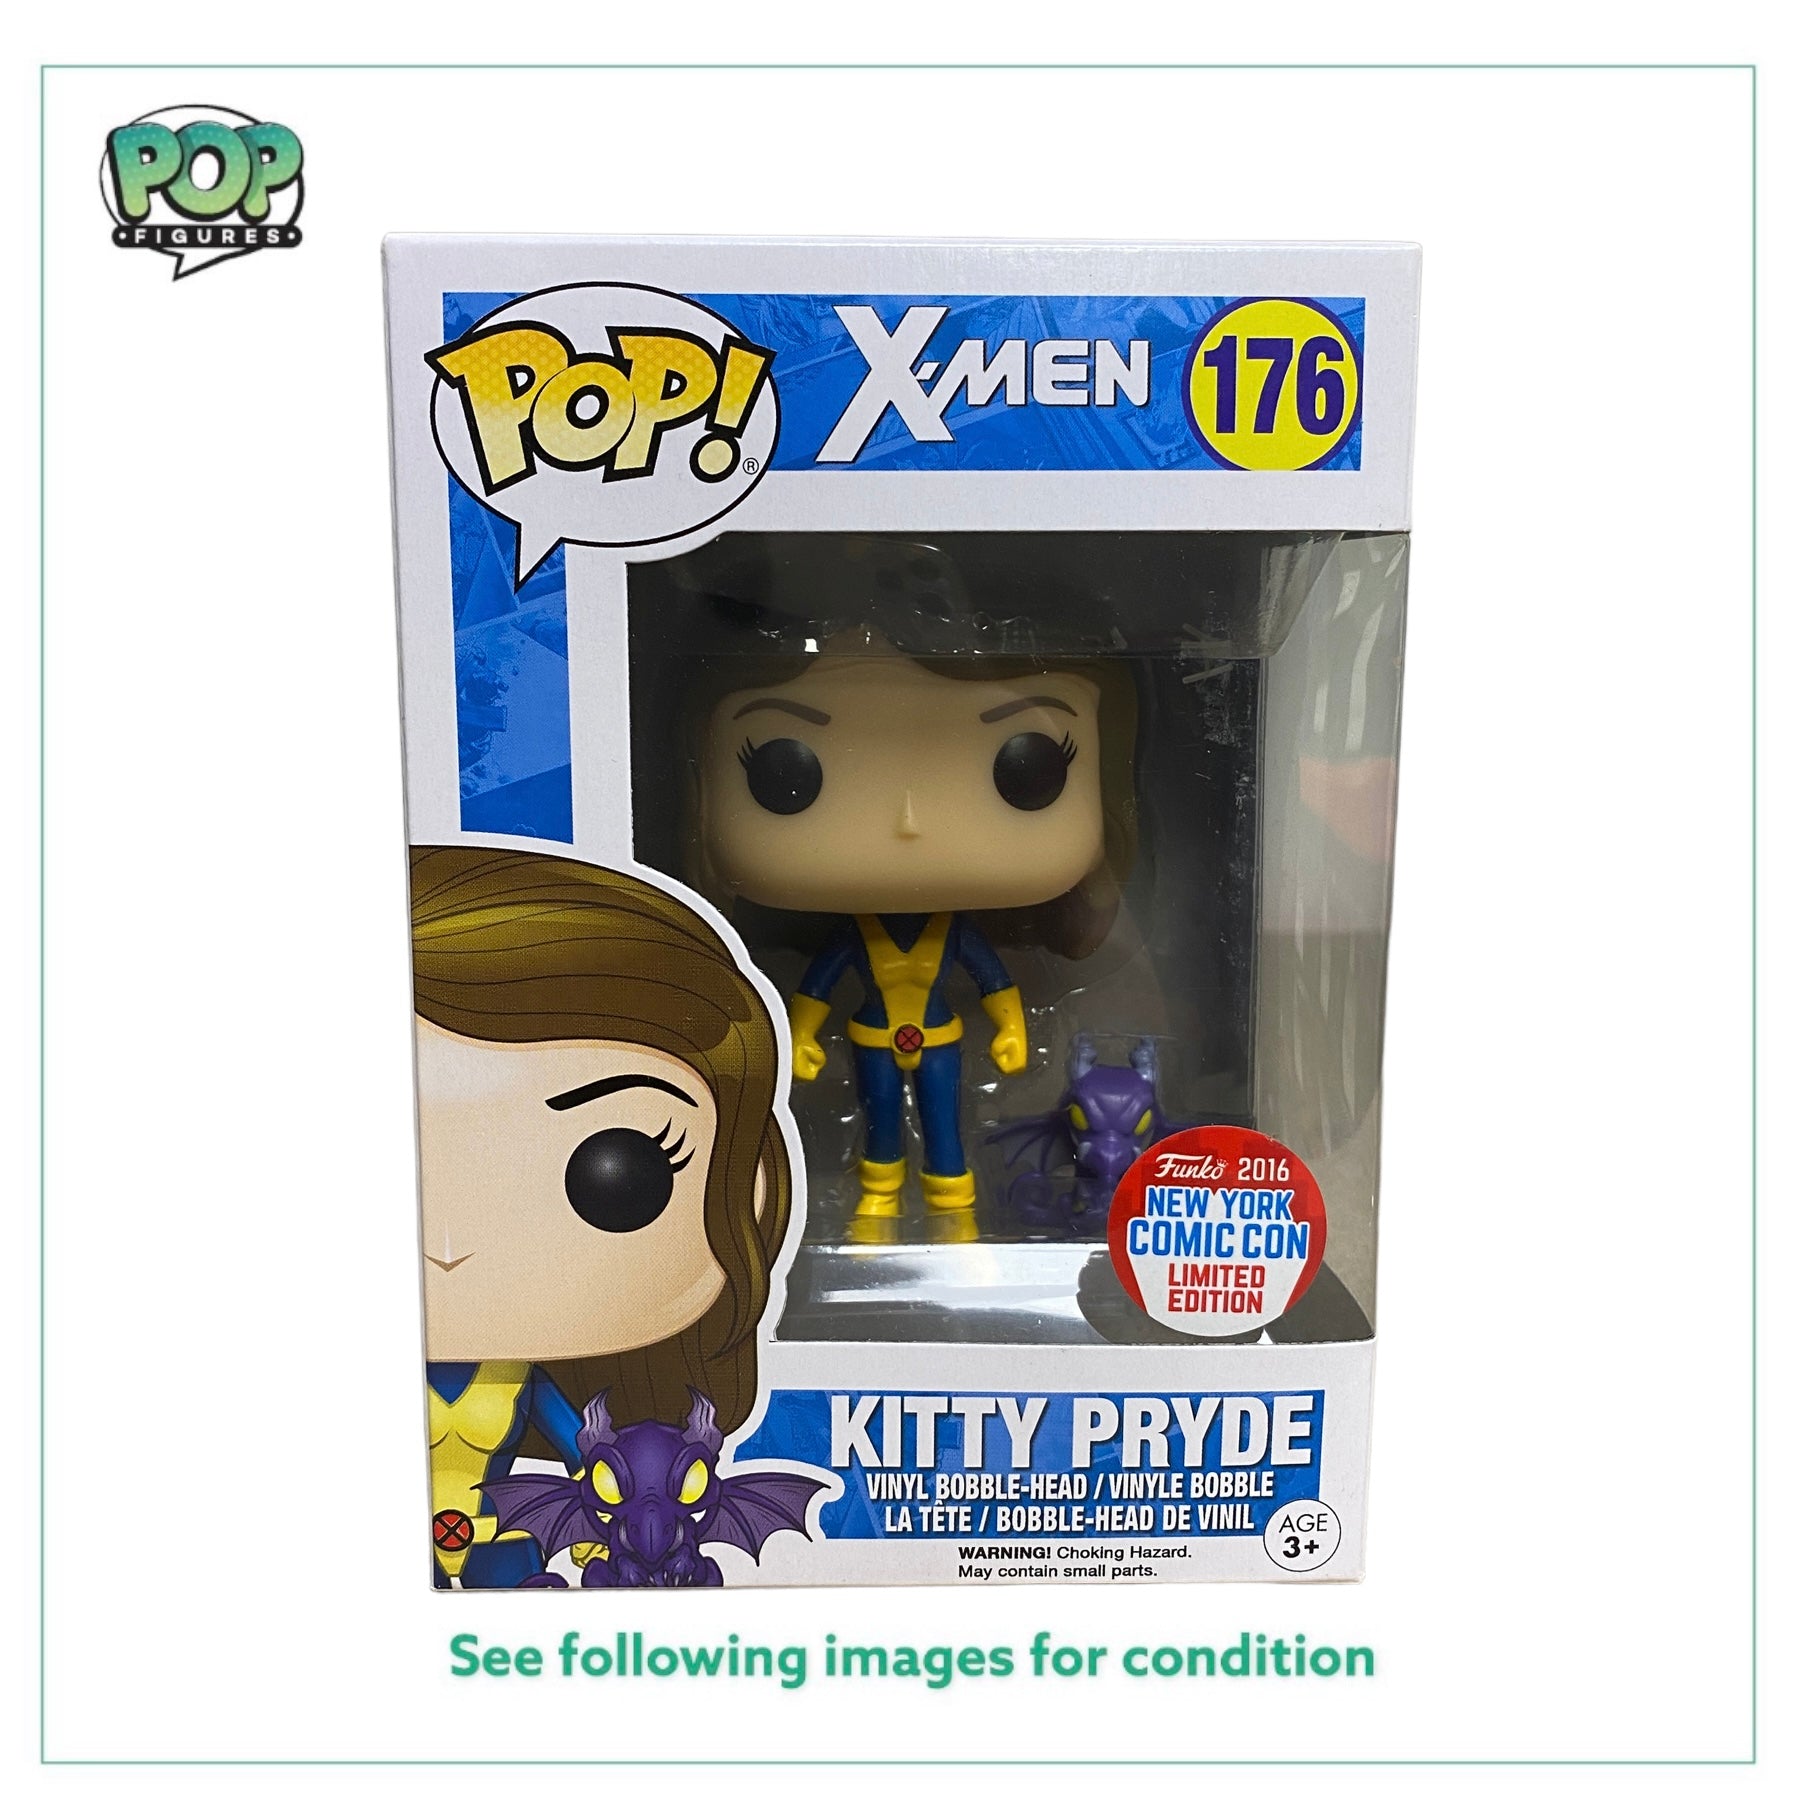 Kitty Pryde #176 (w Lockheed) Funko Pop! - X-Men - NYCC 2016 Exclusive - Condition 9/10